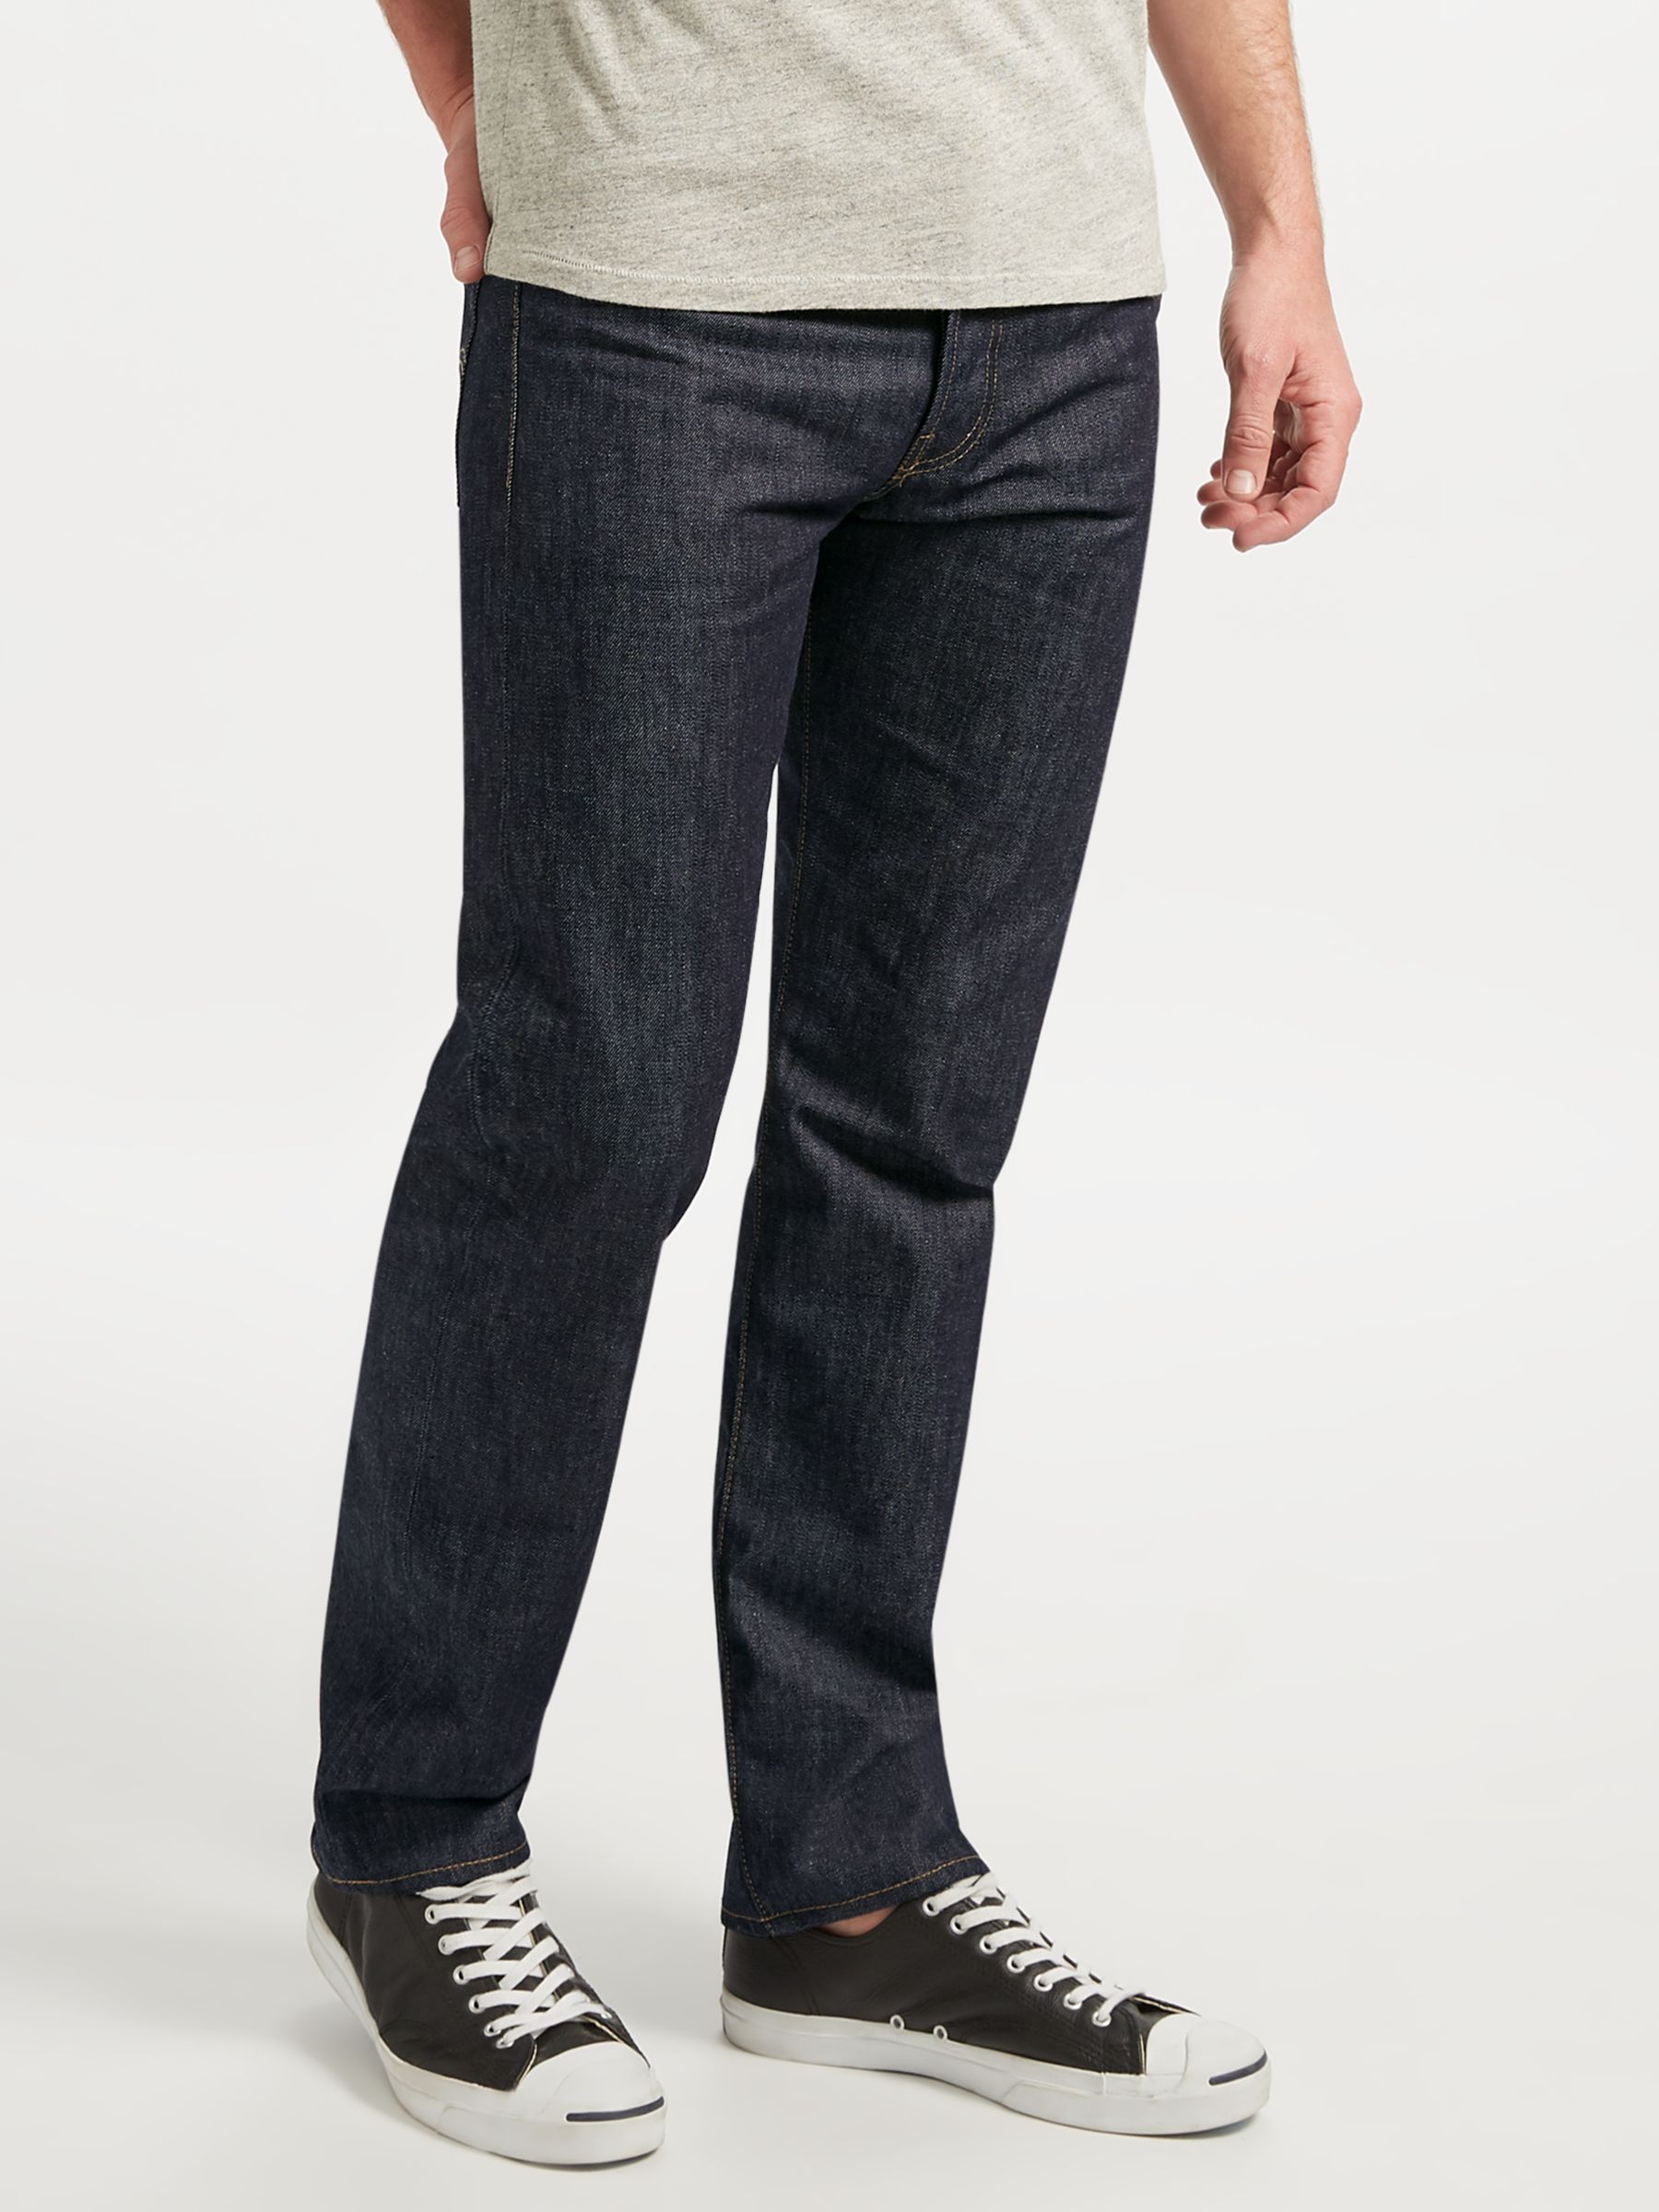 levis 501 selvedge jeans